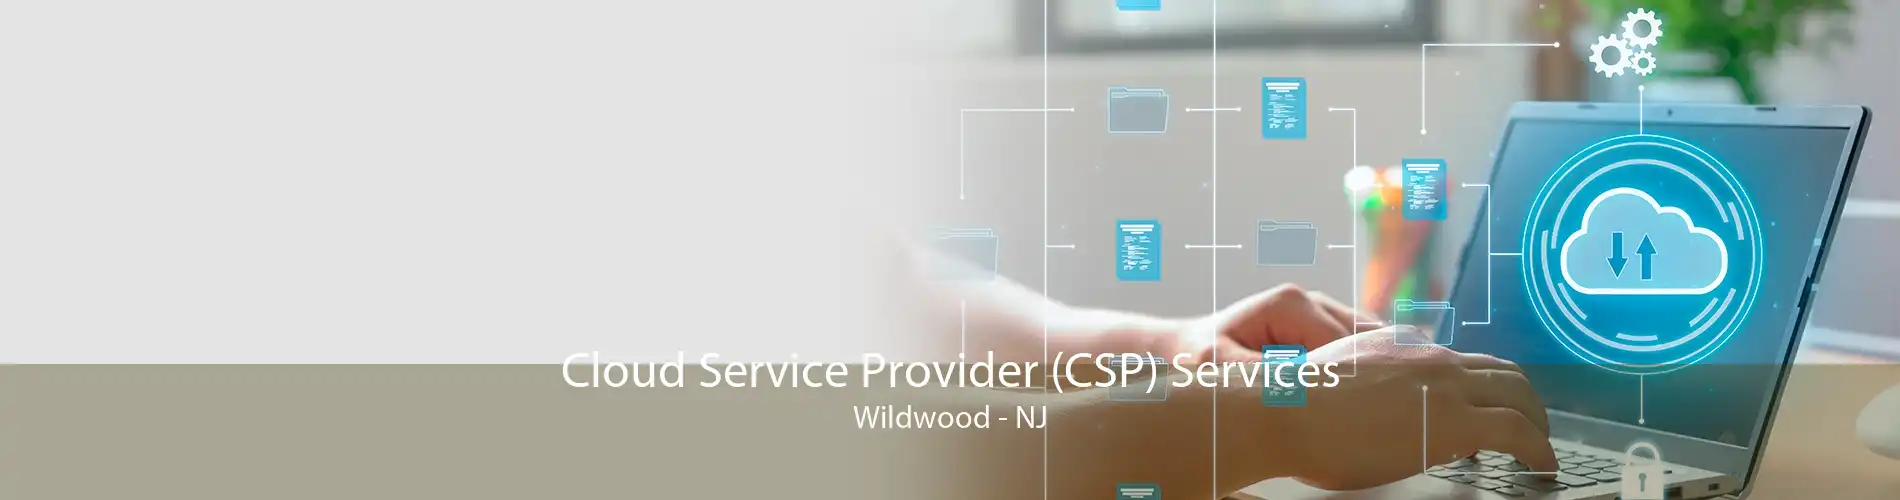 Cloud Service Provider (CSP) Services Wildwood - NJ